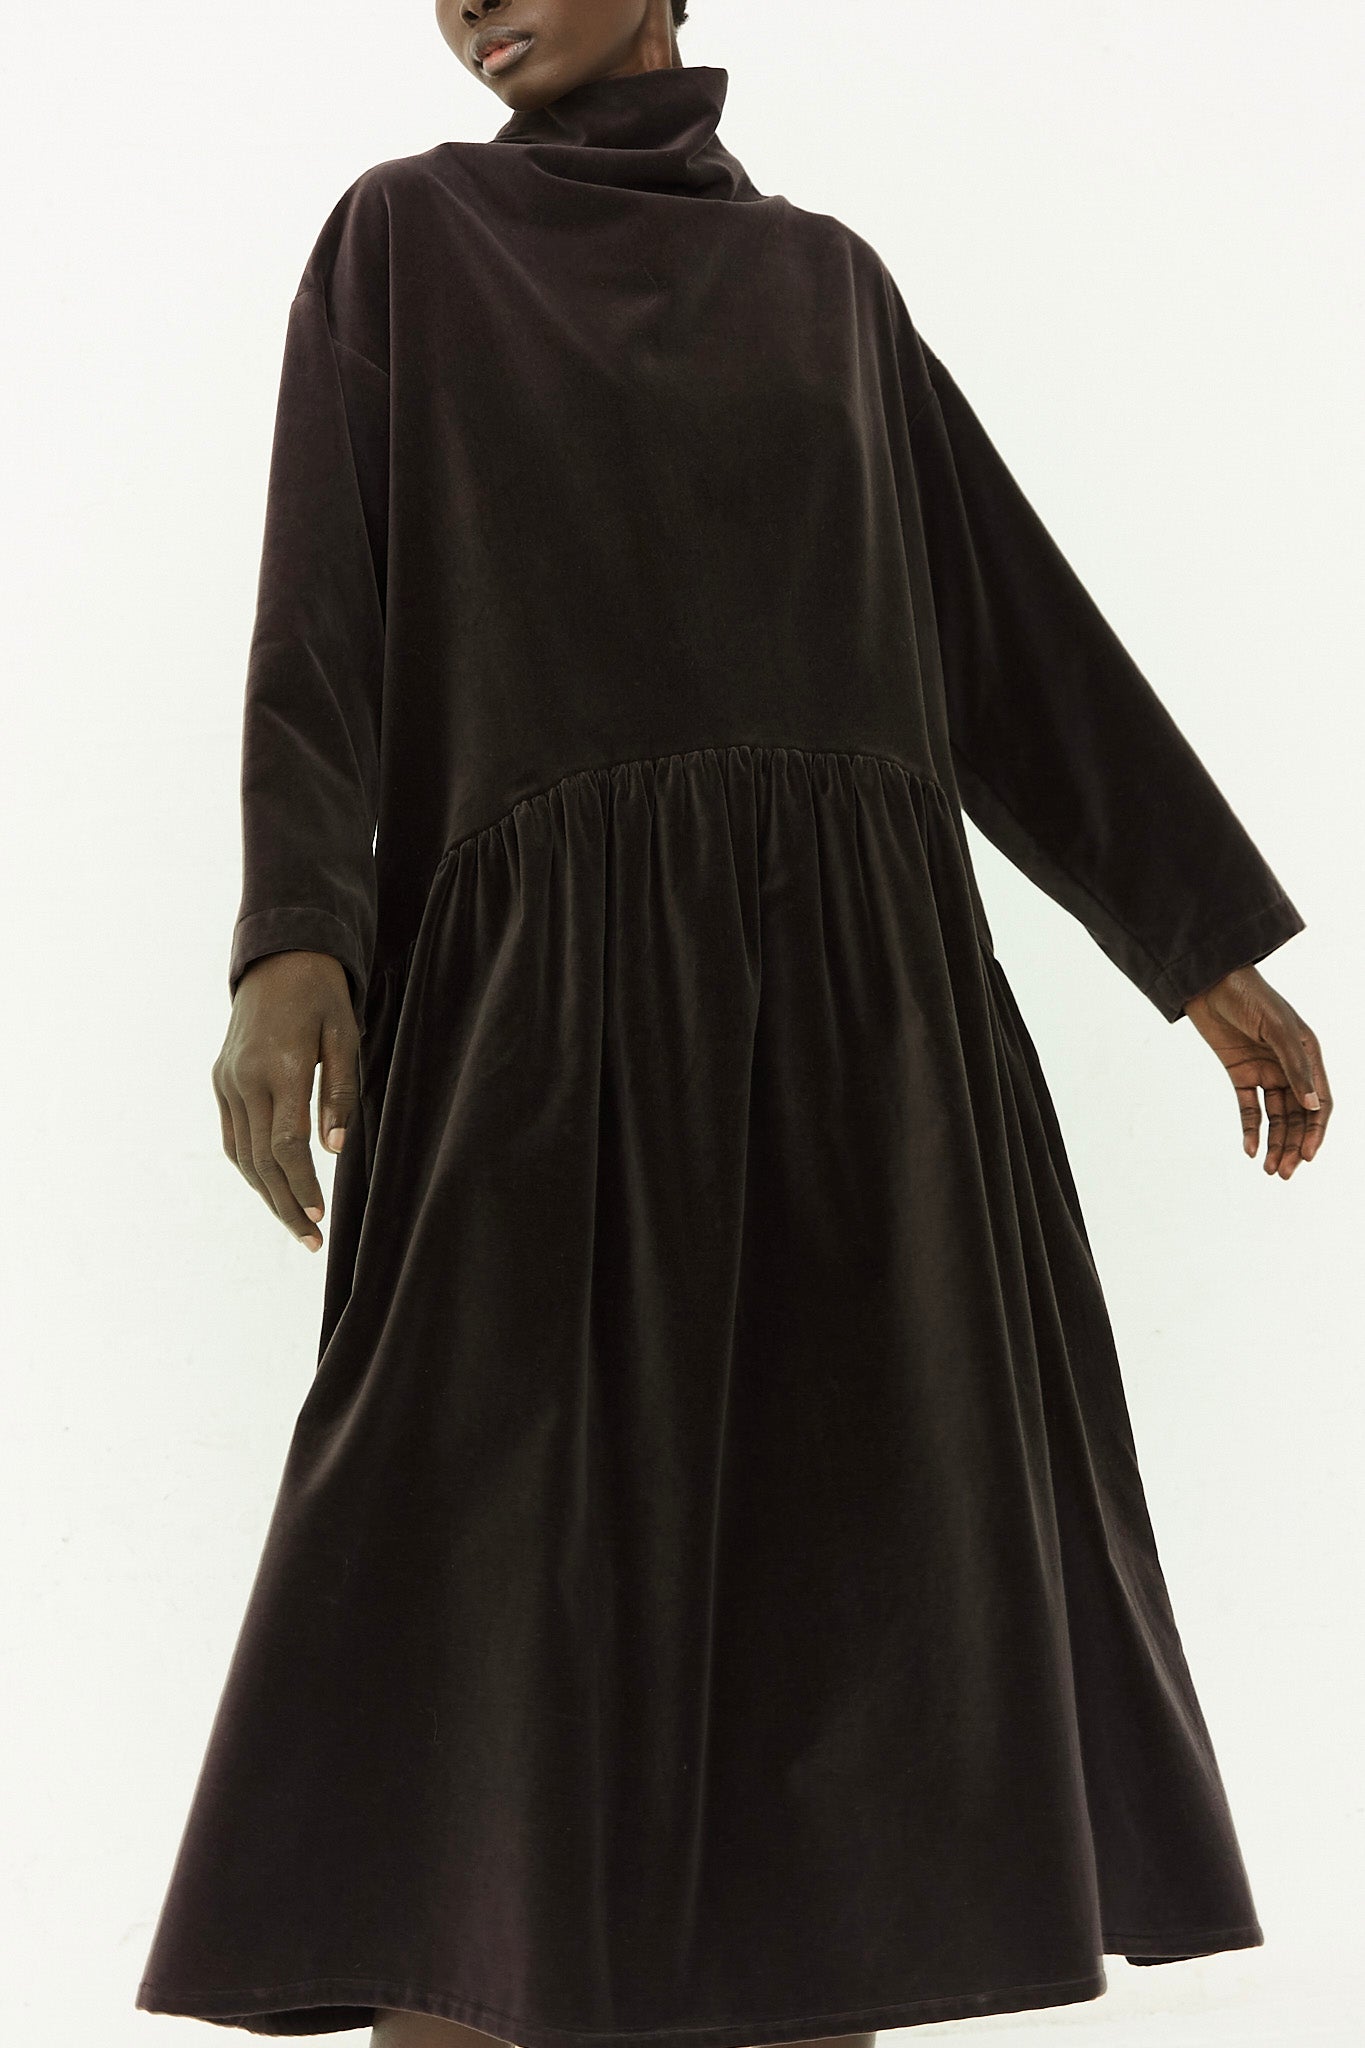 A woman wearing a black velvet dress.